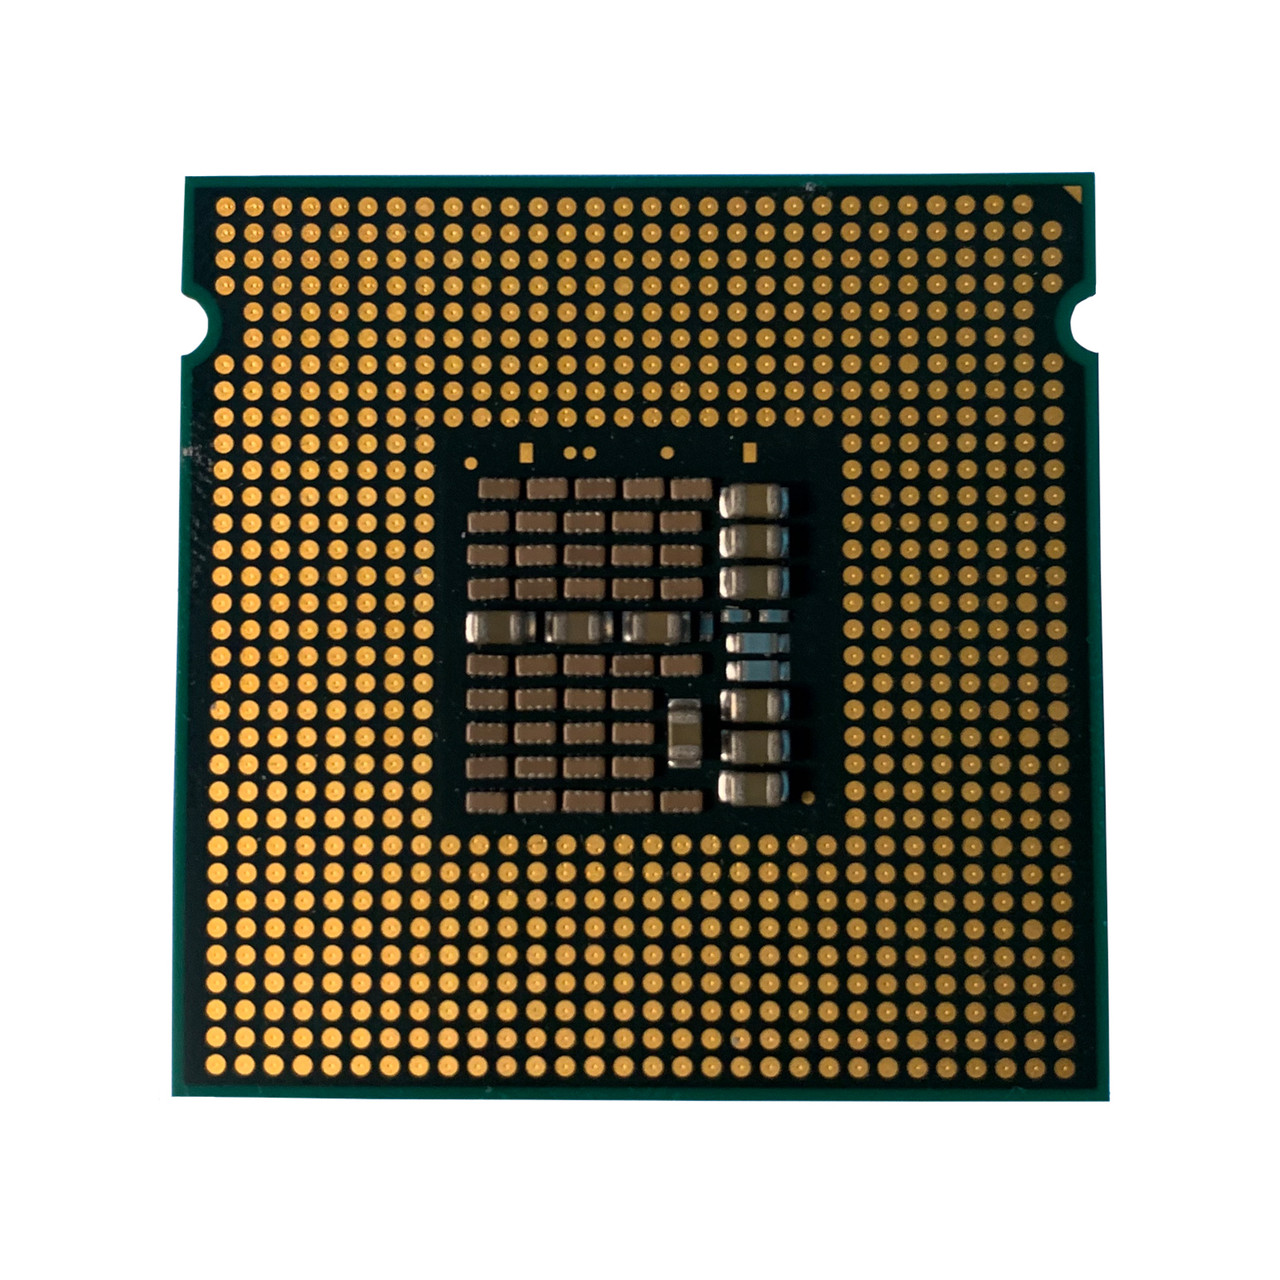 Dell MY563 Xeon 3070 DC 2.66Ghz 4MB 1066FSB Processor